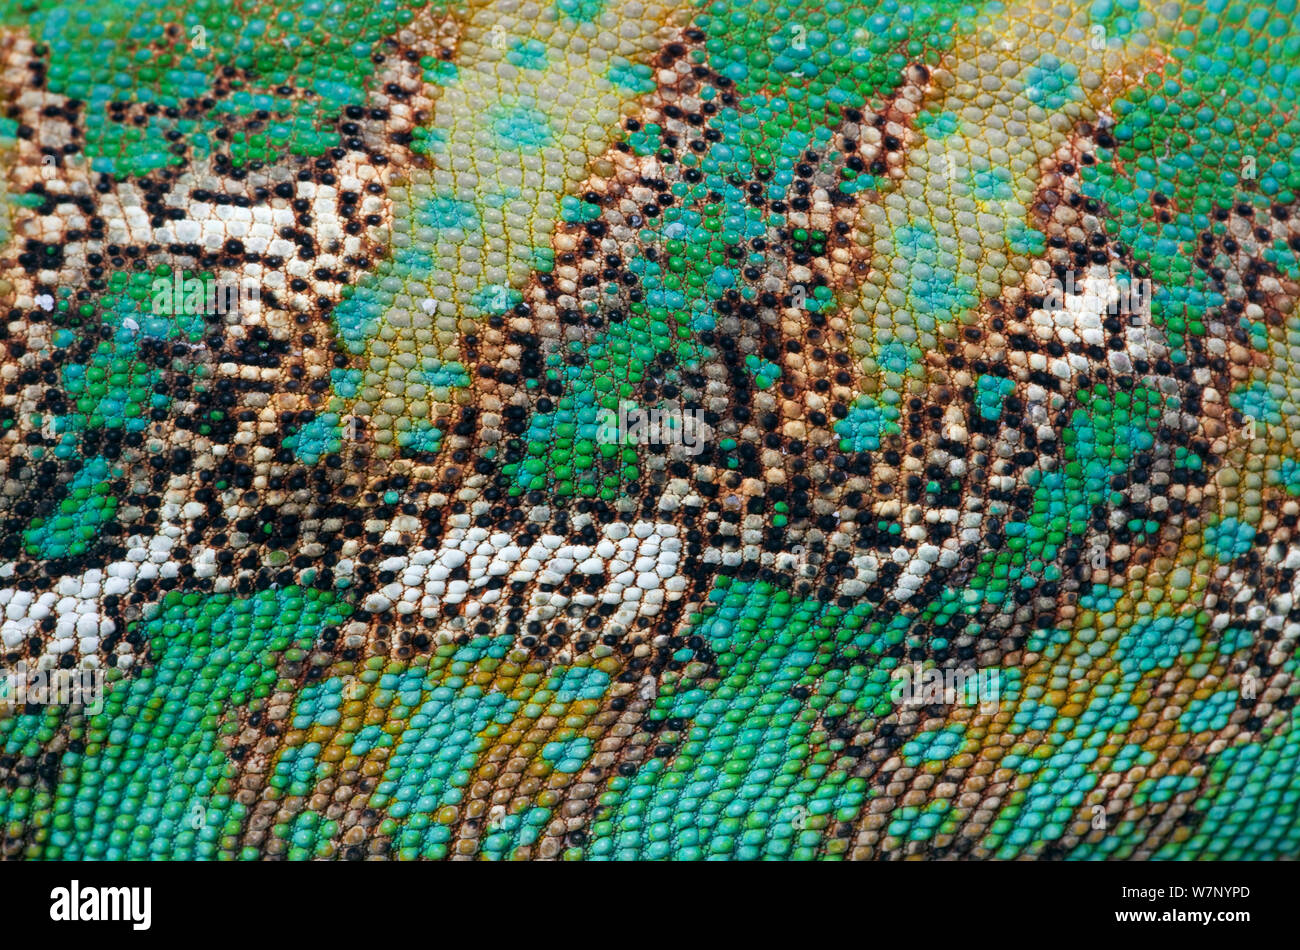 Yemen or Veiled Chameleon (Chamaeleo calyptratus) close-up of skin, captive from the Middle-East Stock Photo